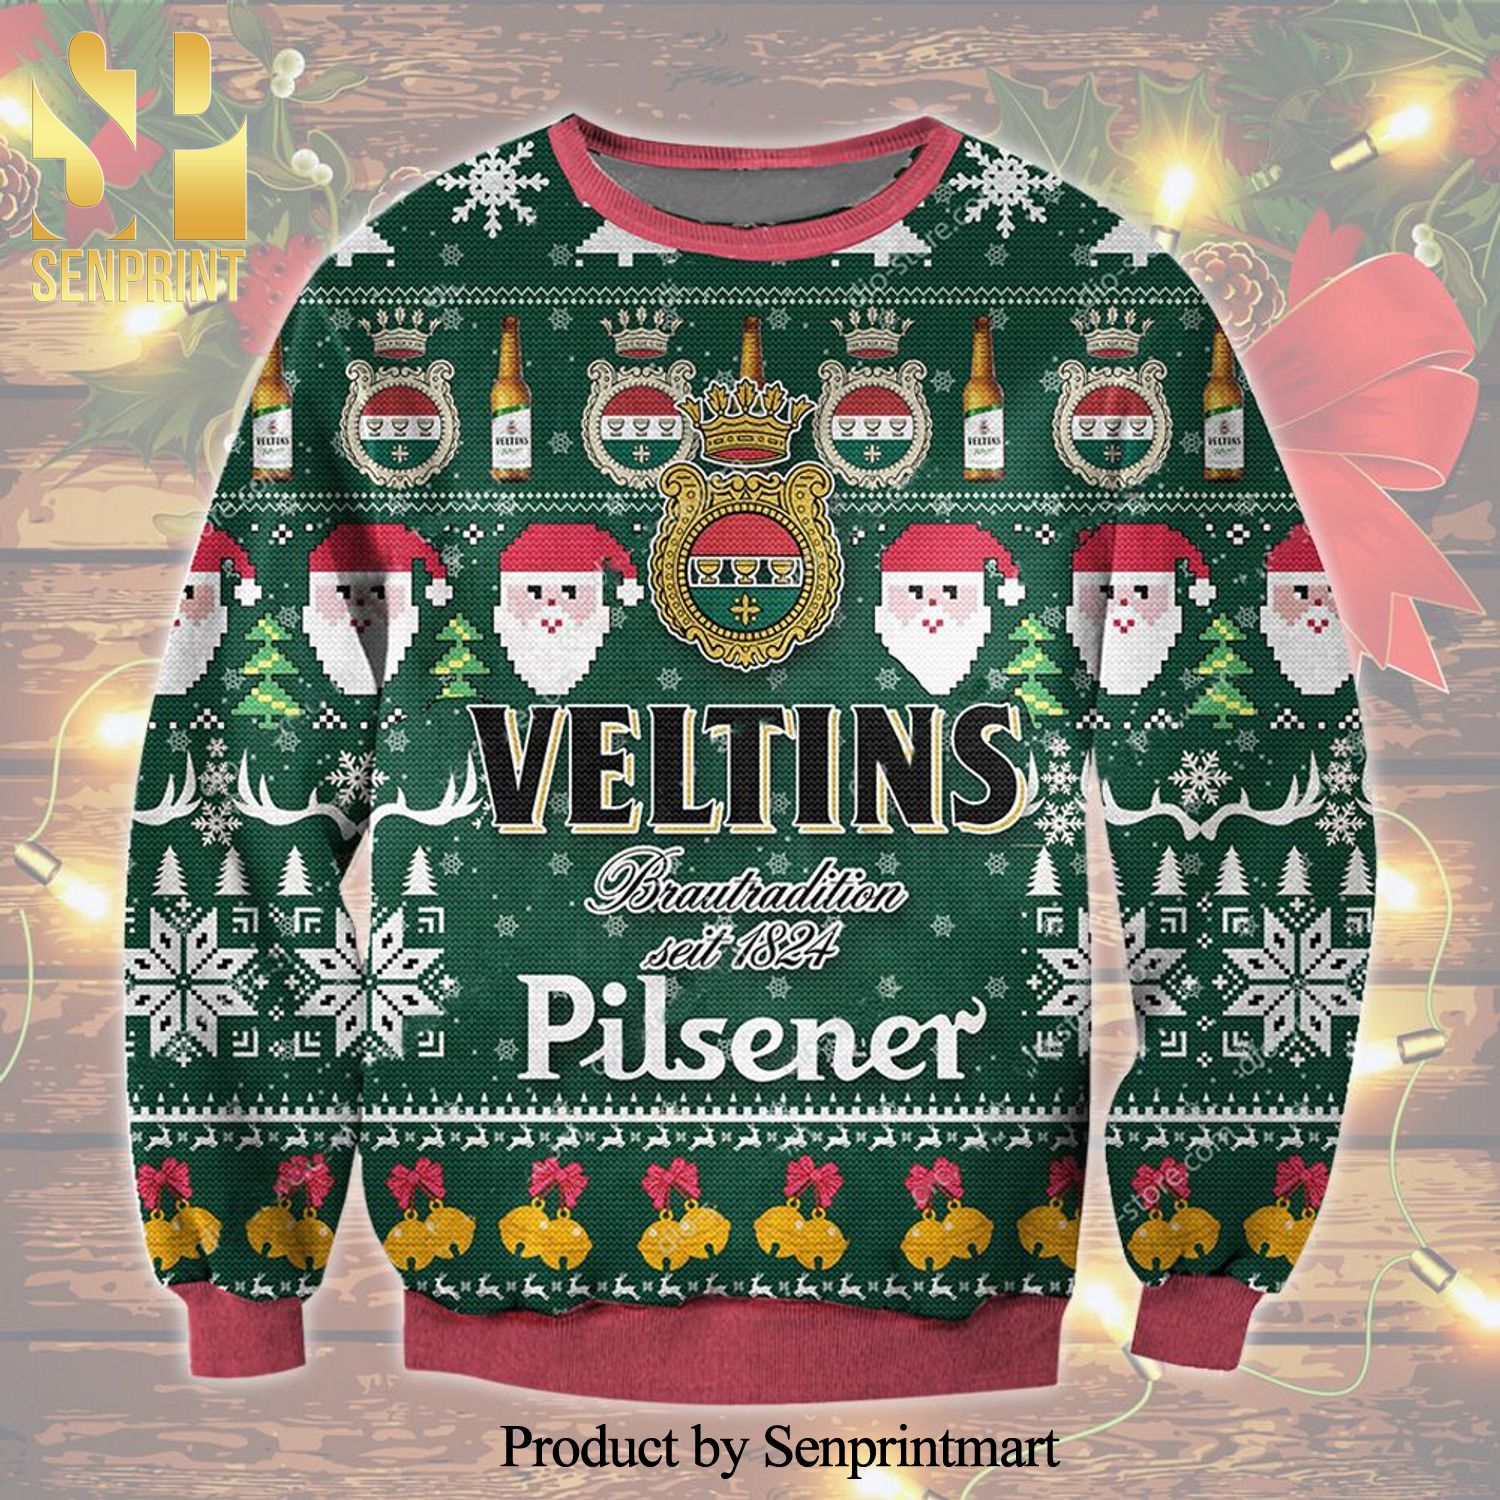 Veltins Pilsener Breutradition Seit 1824 Knitted Ugly Christmas Sweater